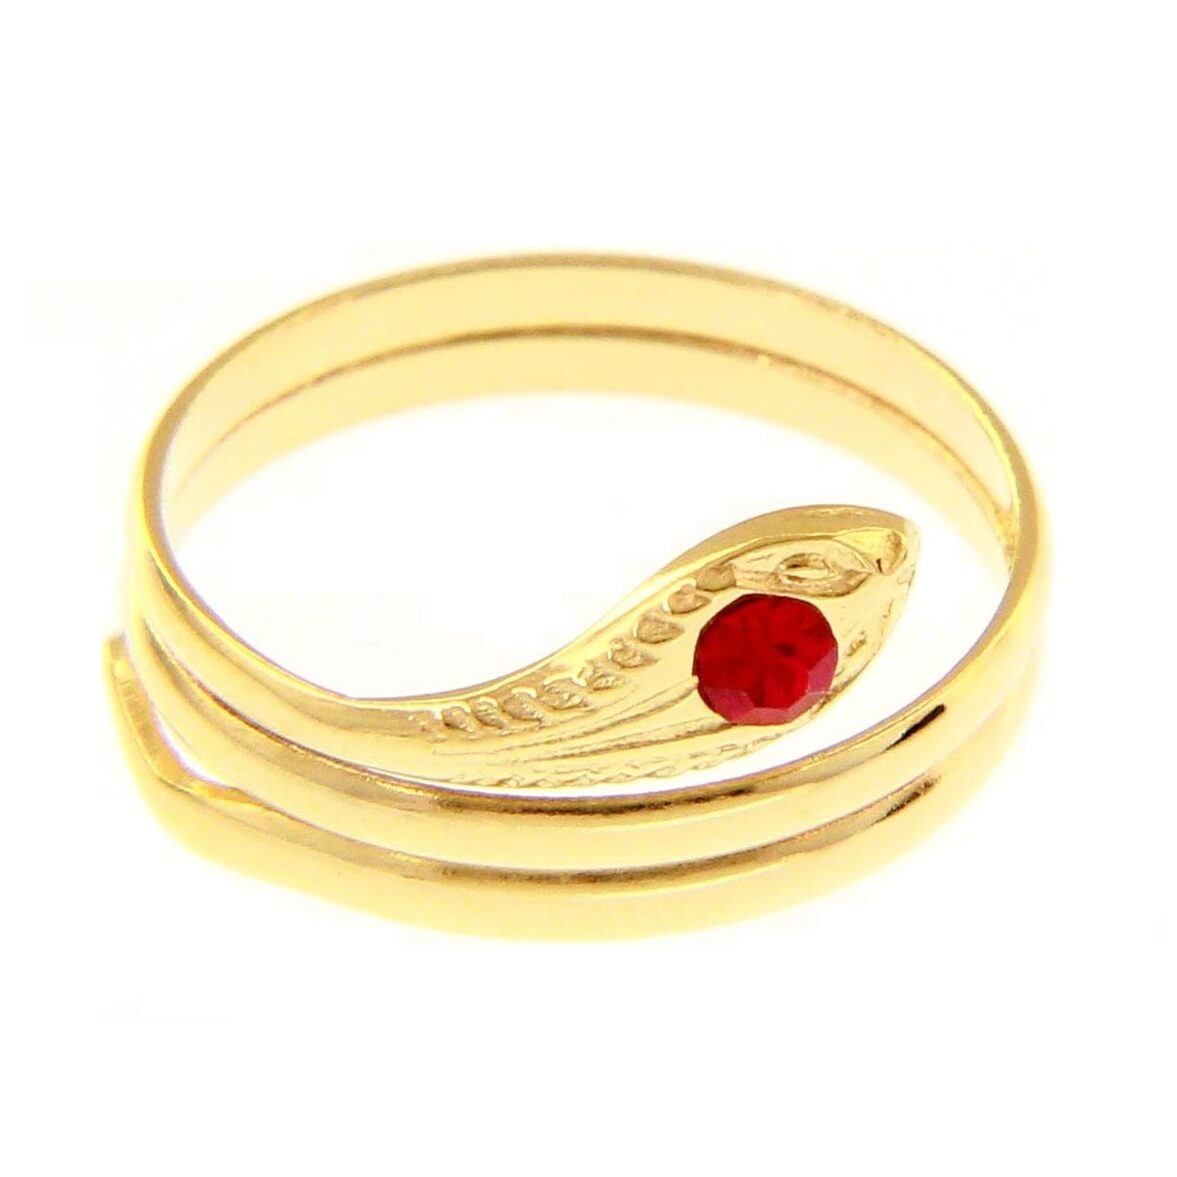 Anne Sportun Gold and Channel-Set Diamond Ring – Peridot Fine Jewelry